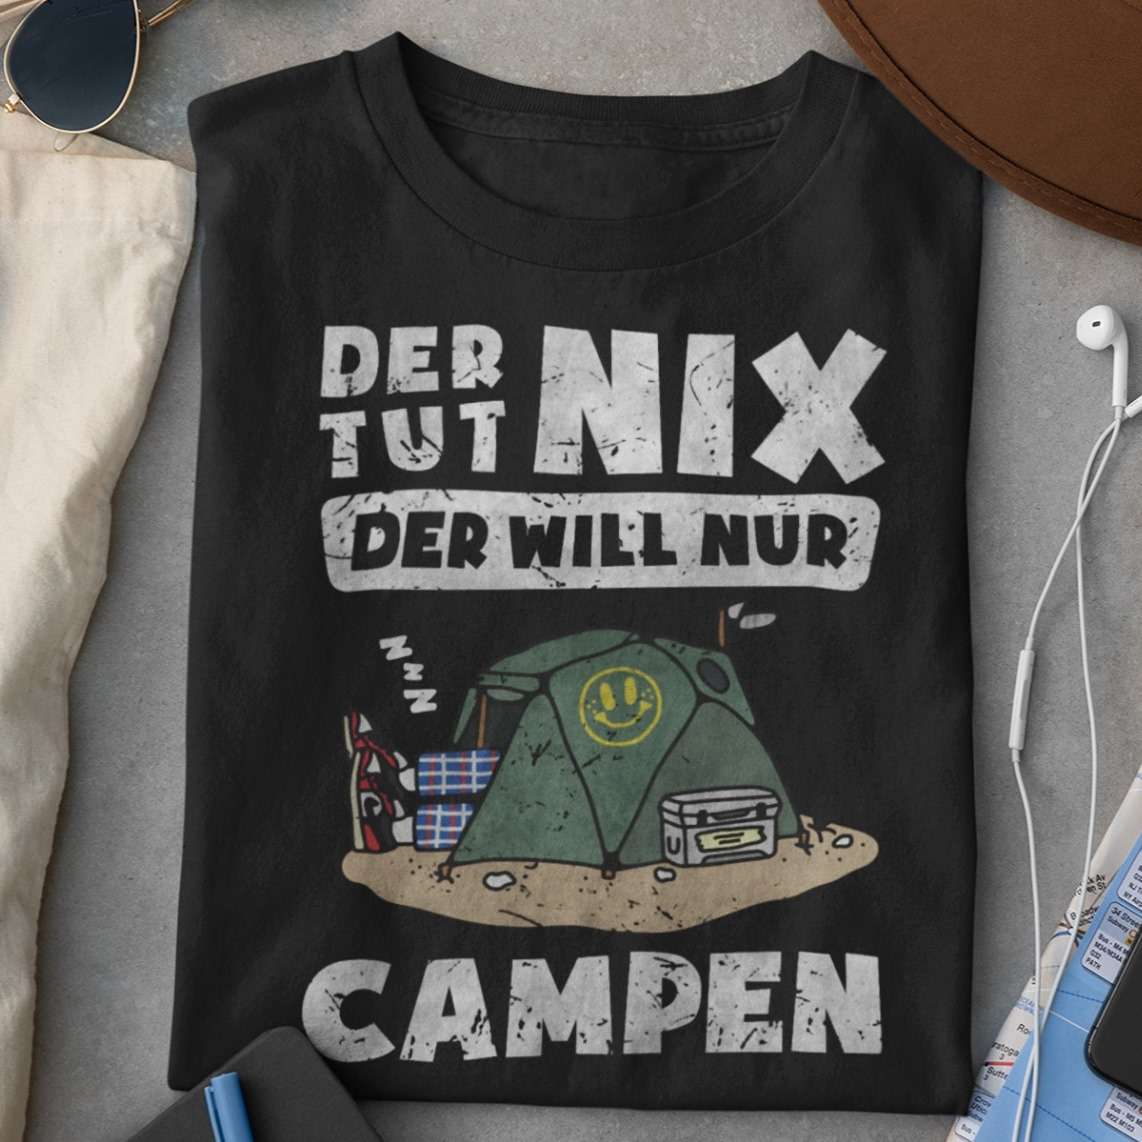 Der tut nix der will nur campen - Sleep in the tent, camping tent, gift for camper